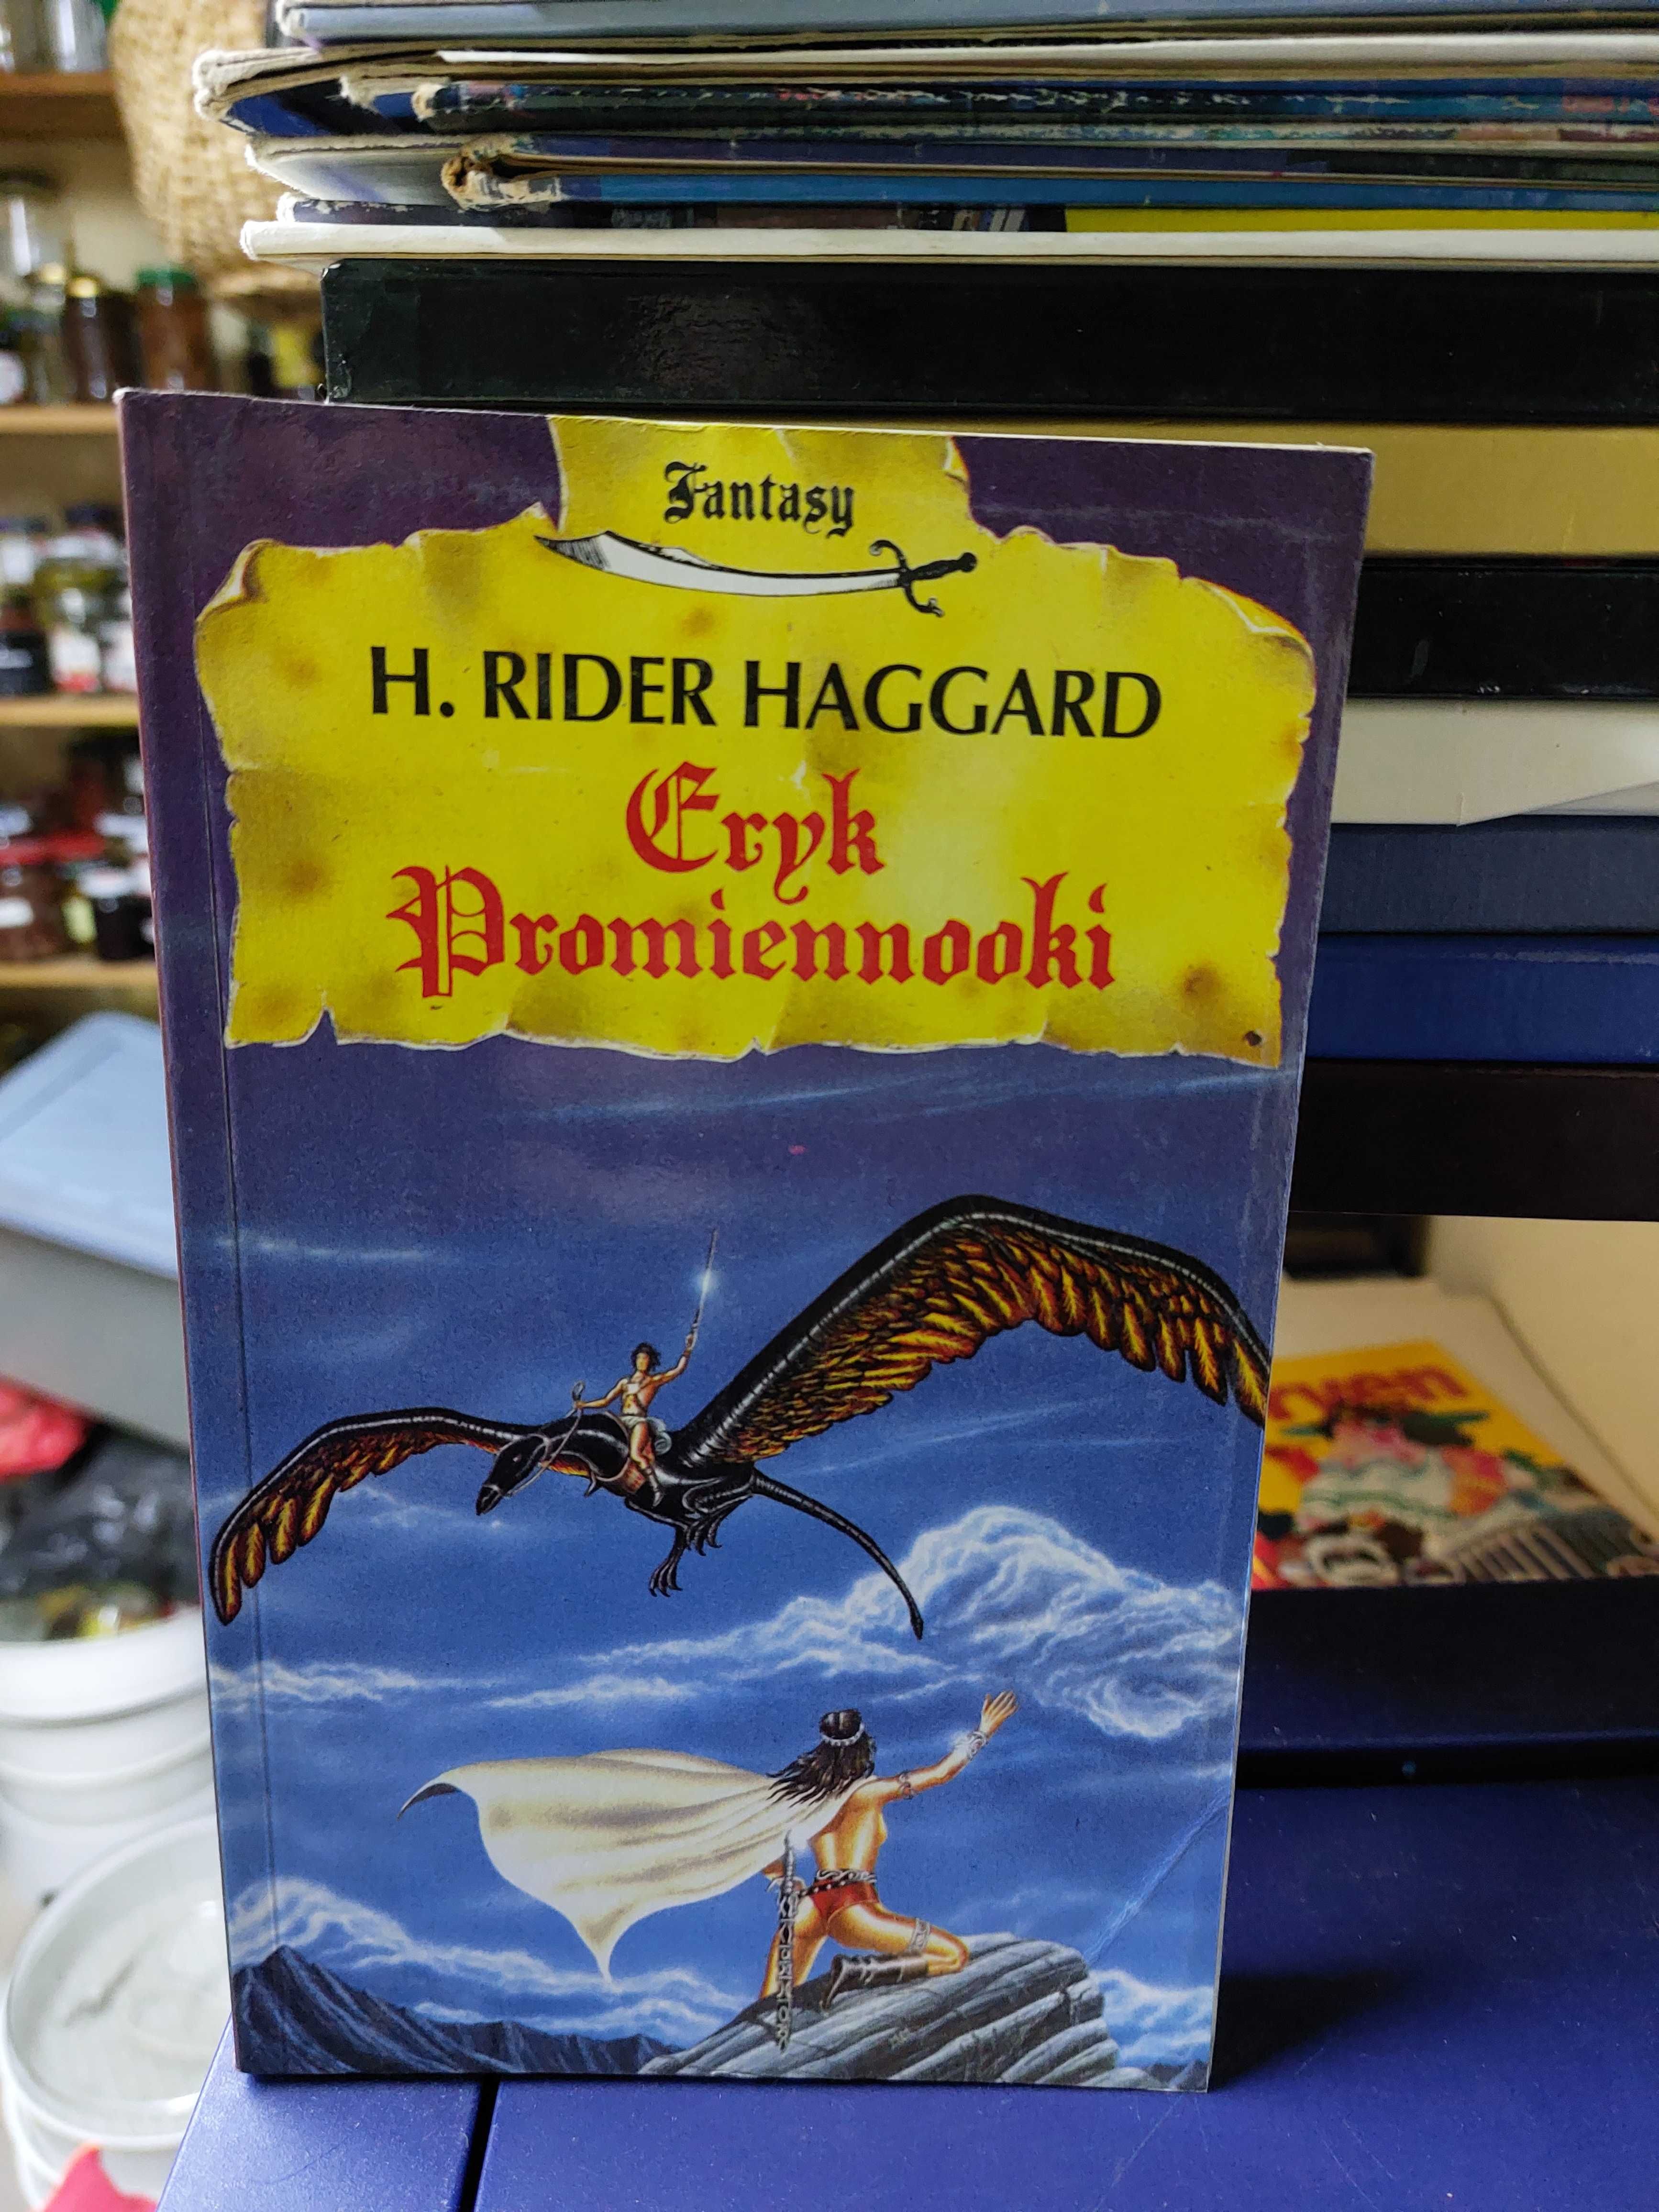 H. Rider Haggard, Eryk Promiennooki